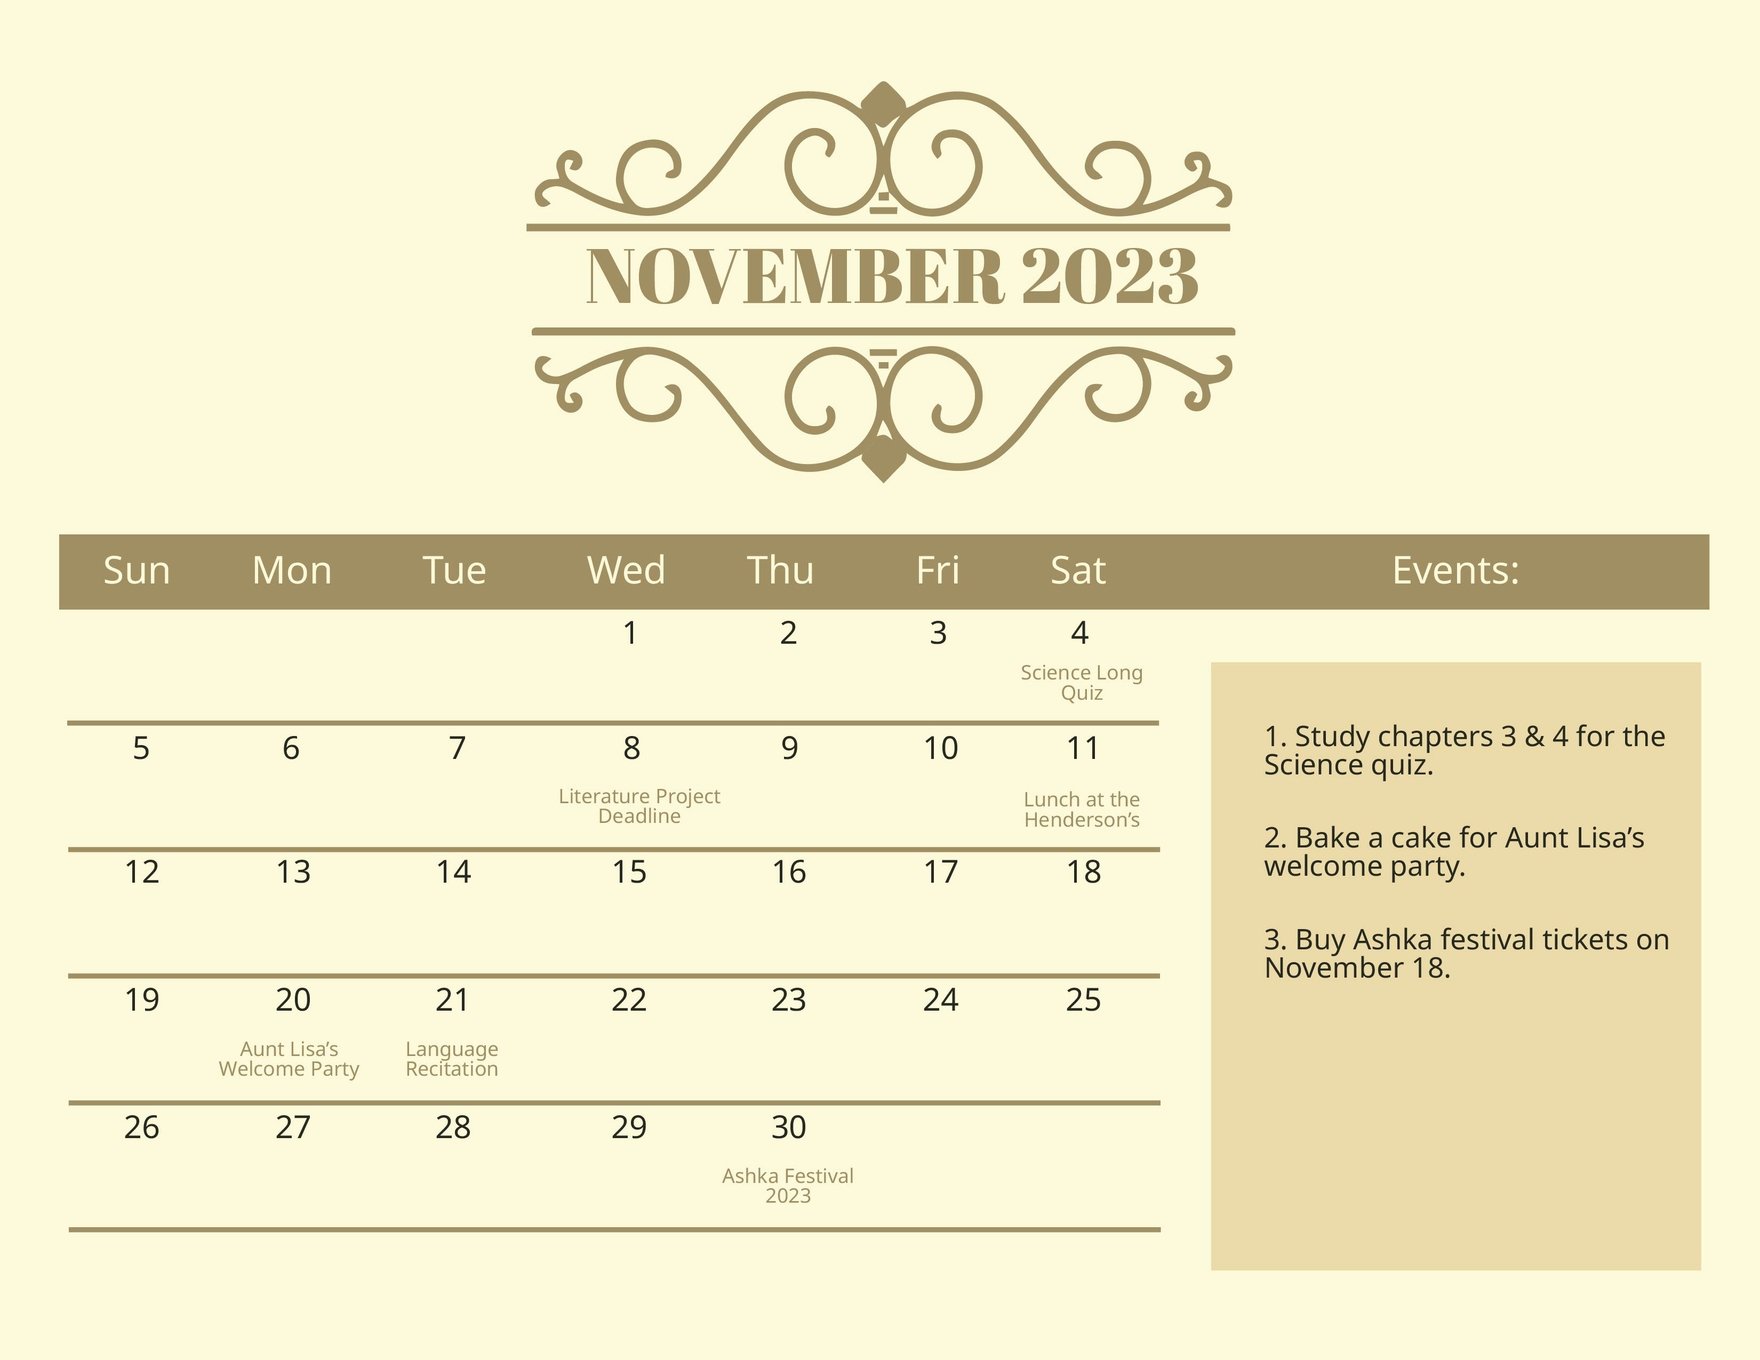 Free Fancy November 2023 Calendar in Word, Google Docs, Excel, Google Sheets, Illustrator, EPS, SVG, JPG